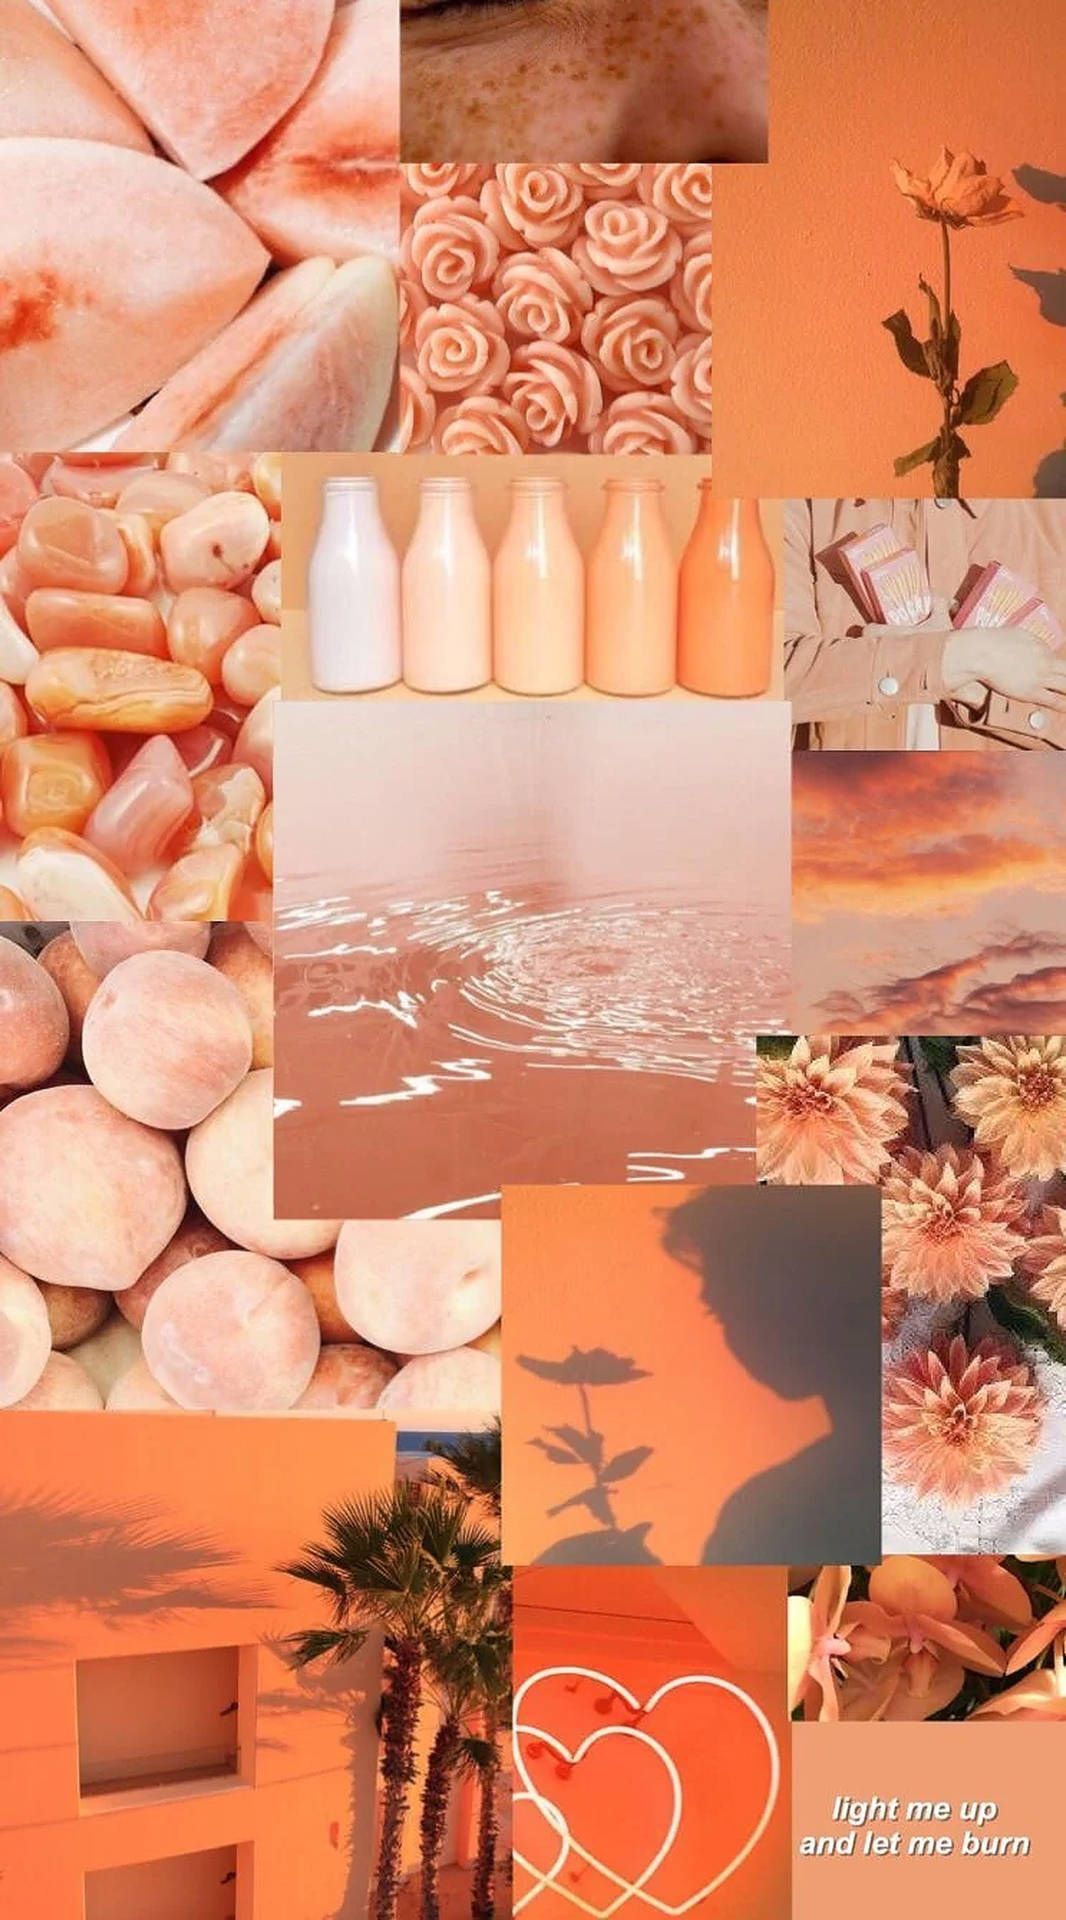 Download iPhone Aesthetic Orange Collage Wallpaper